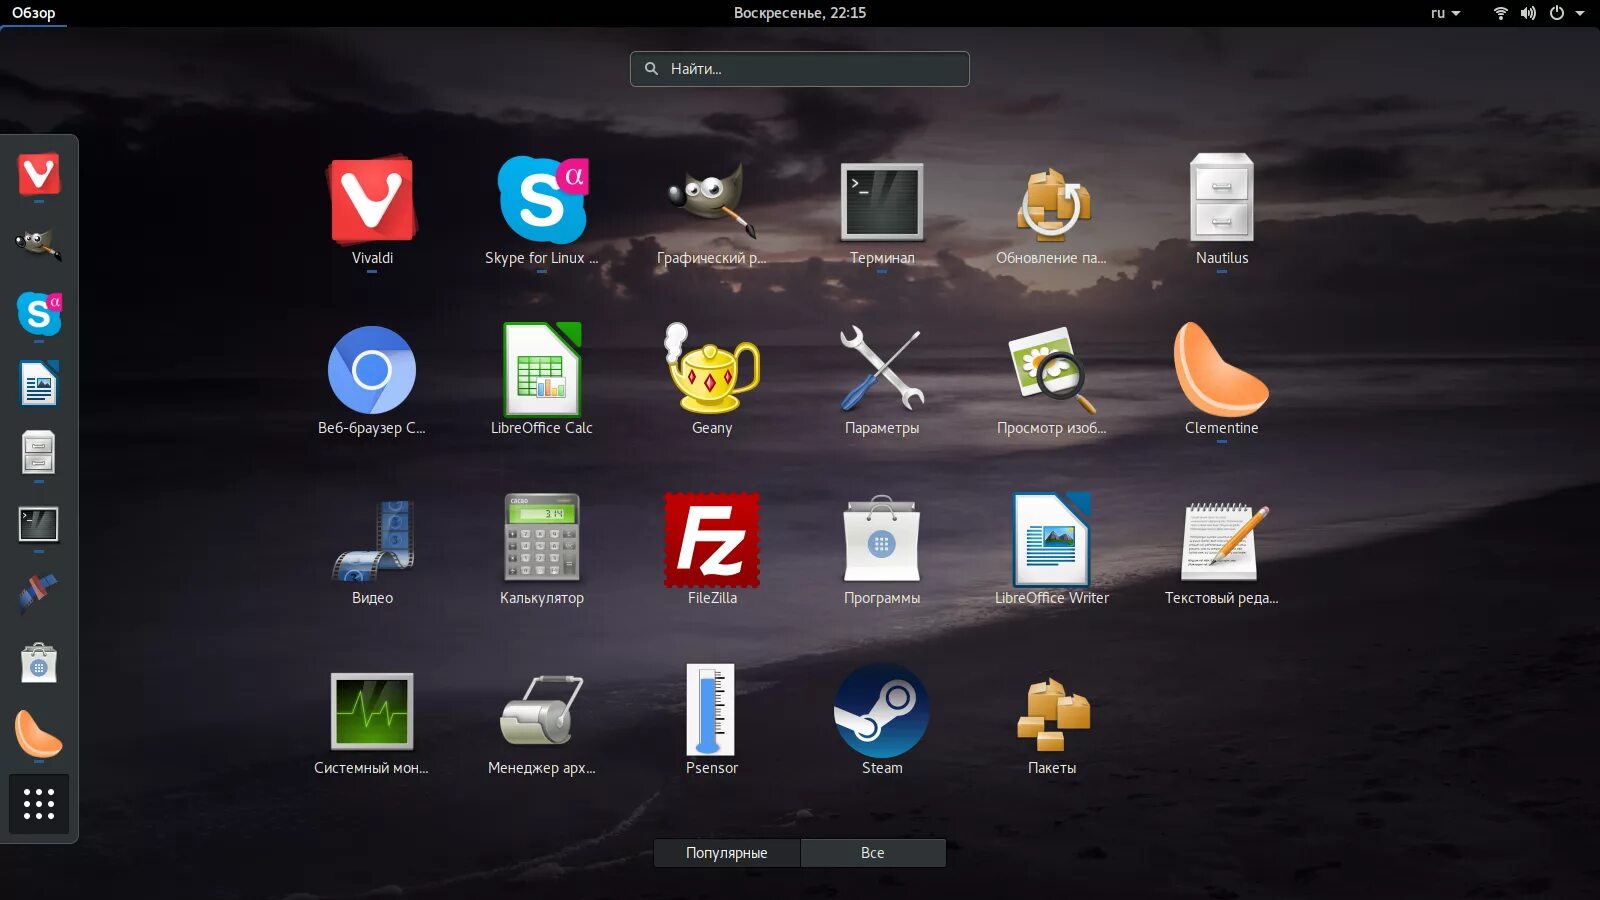 Ubuntu apps. Программное обеспечение Linux. Программа Linux. Линекс программное обеспечение. Прикладные программы Linux.